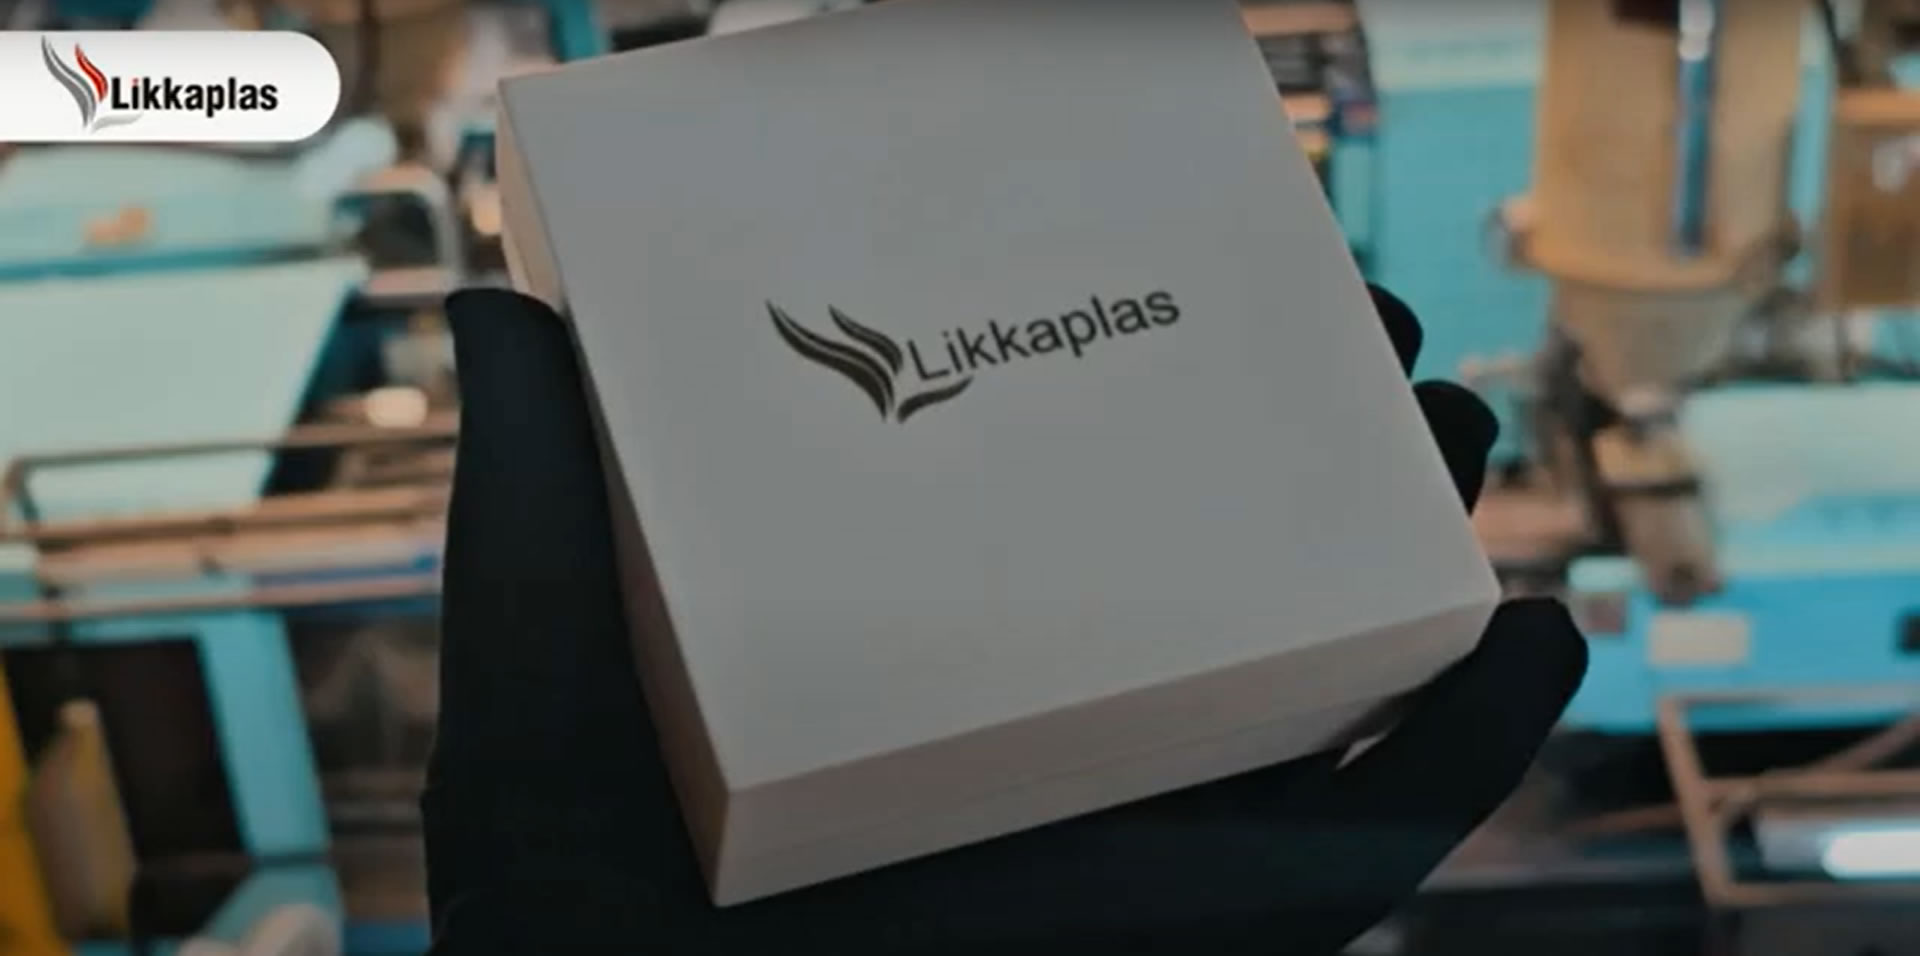 Conheça a Likkaplas